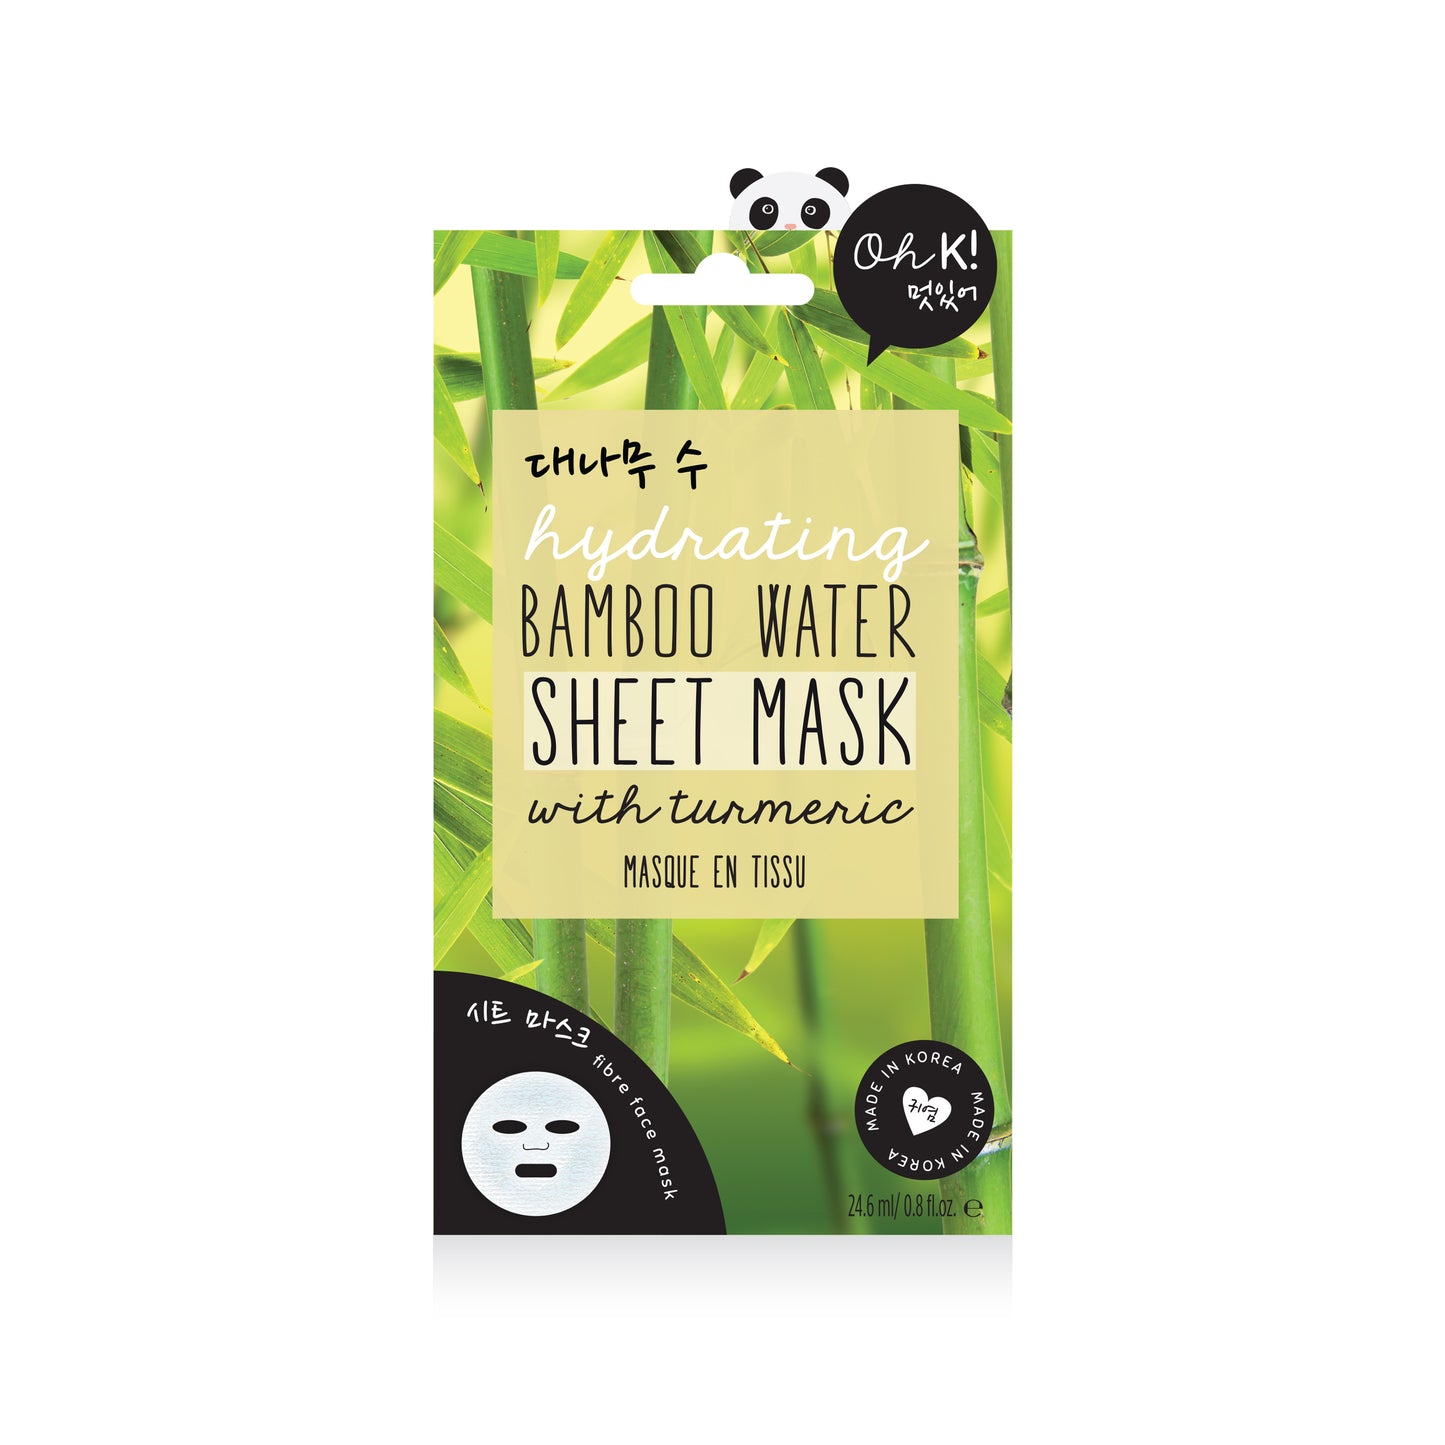 Oh K! Bamboo Water Sheet Mask